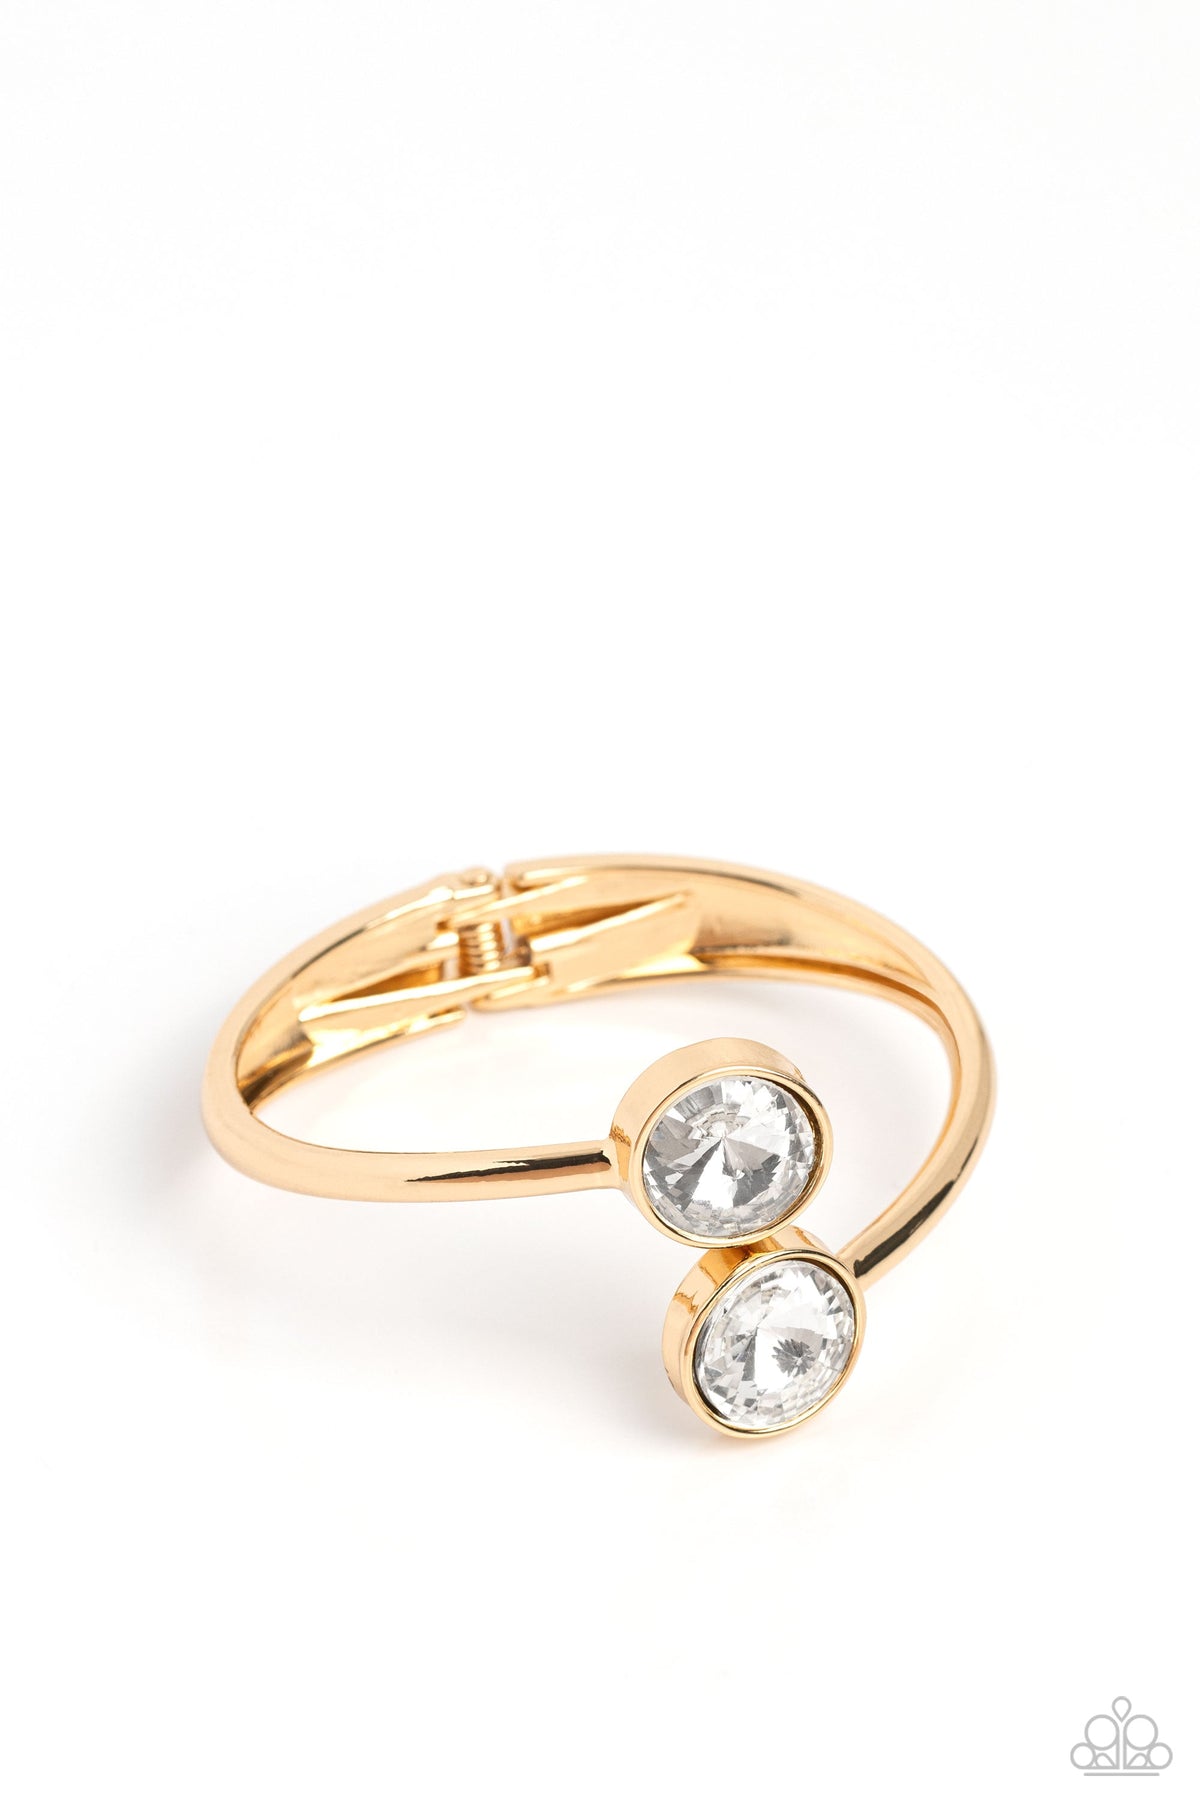 Daily Dazzle Gold &amp; White Rhinestone Bracelet - Paparazzi Accessories- lightbox - CarasShop.com - $5 Jewelry by Cara Jewels